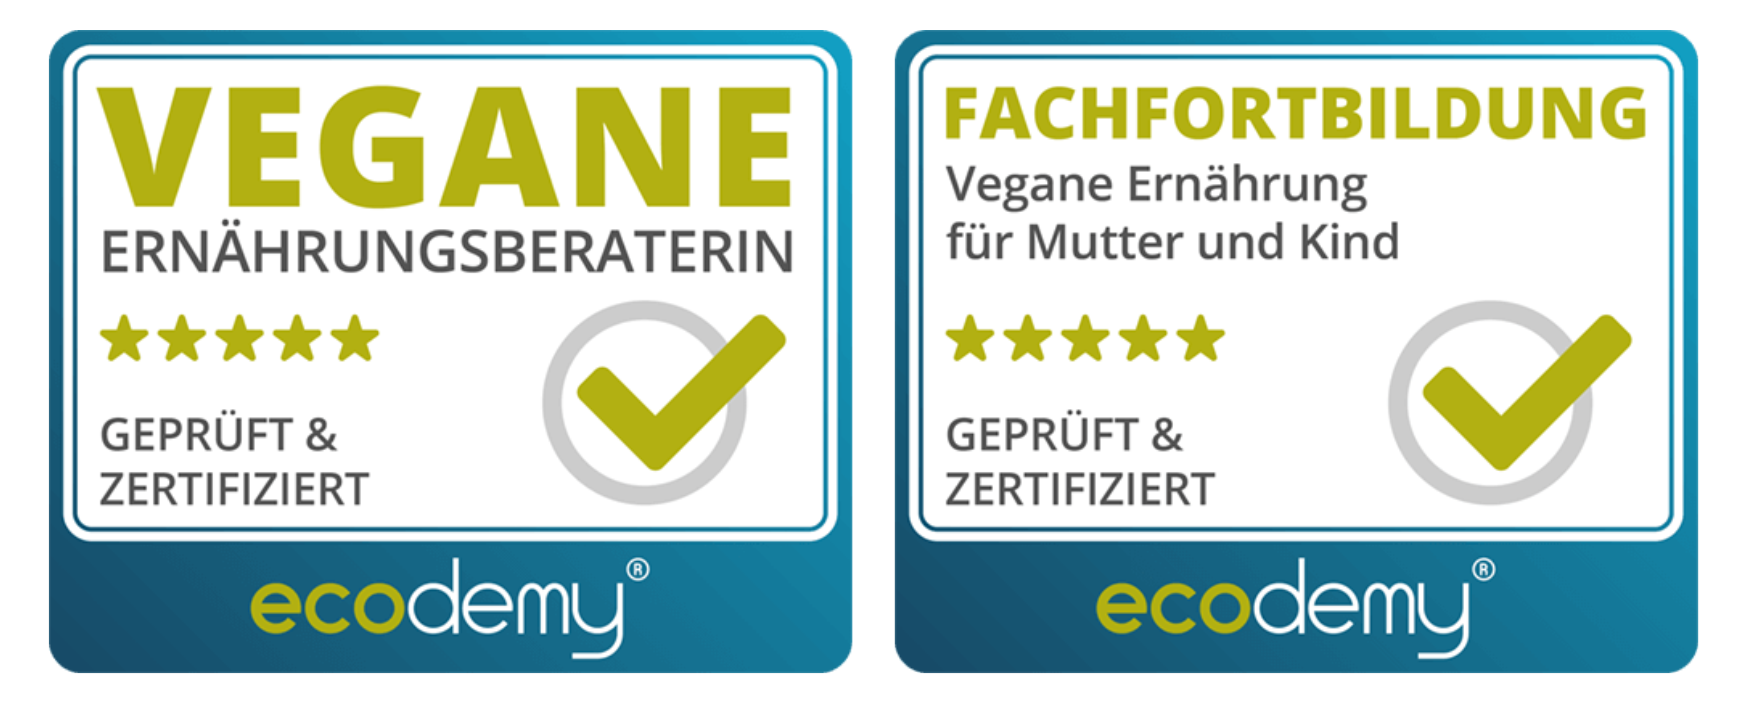 Zertifikat Vegane Ernährungsberaterin Ecodemy - Vegane oder vegetarische Ernährungsberatung